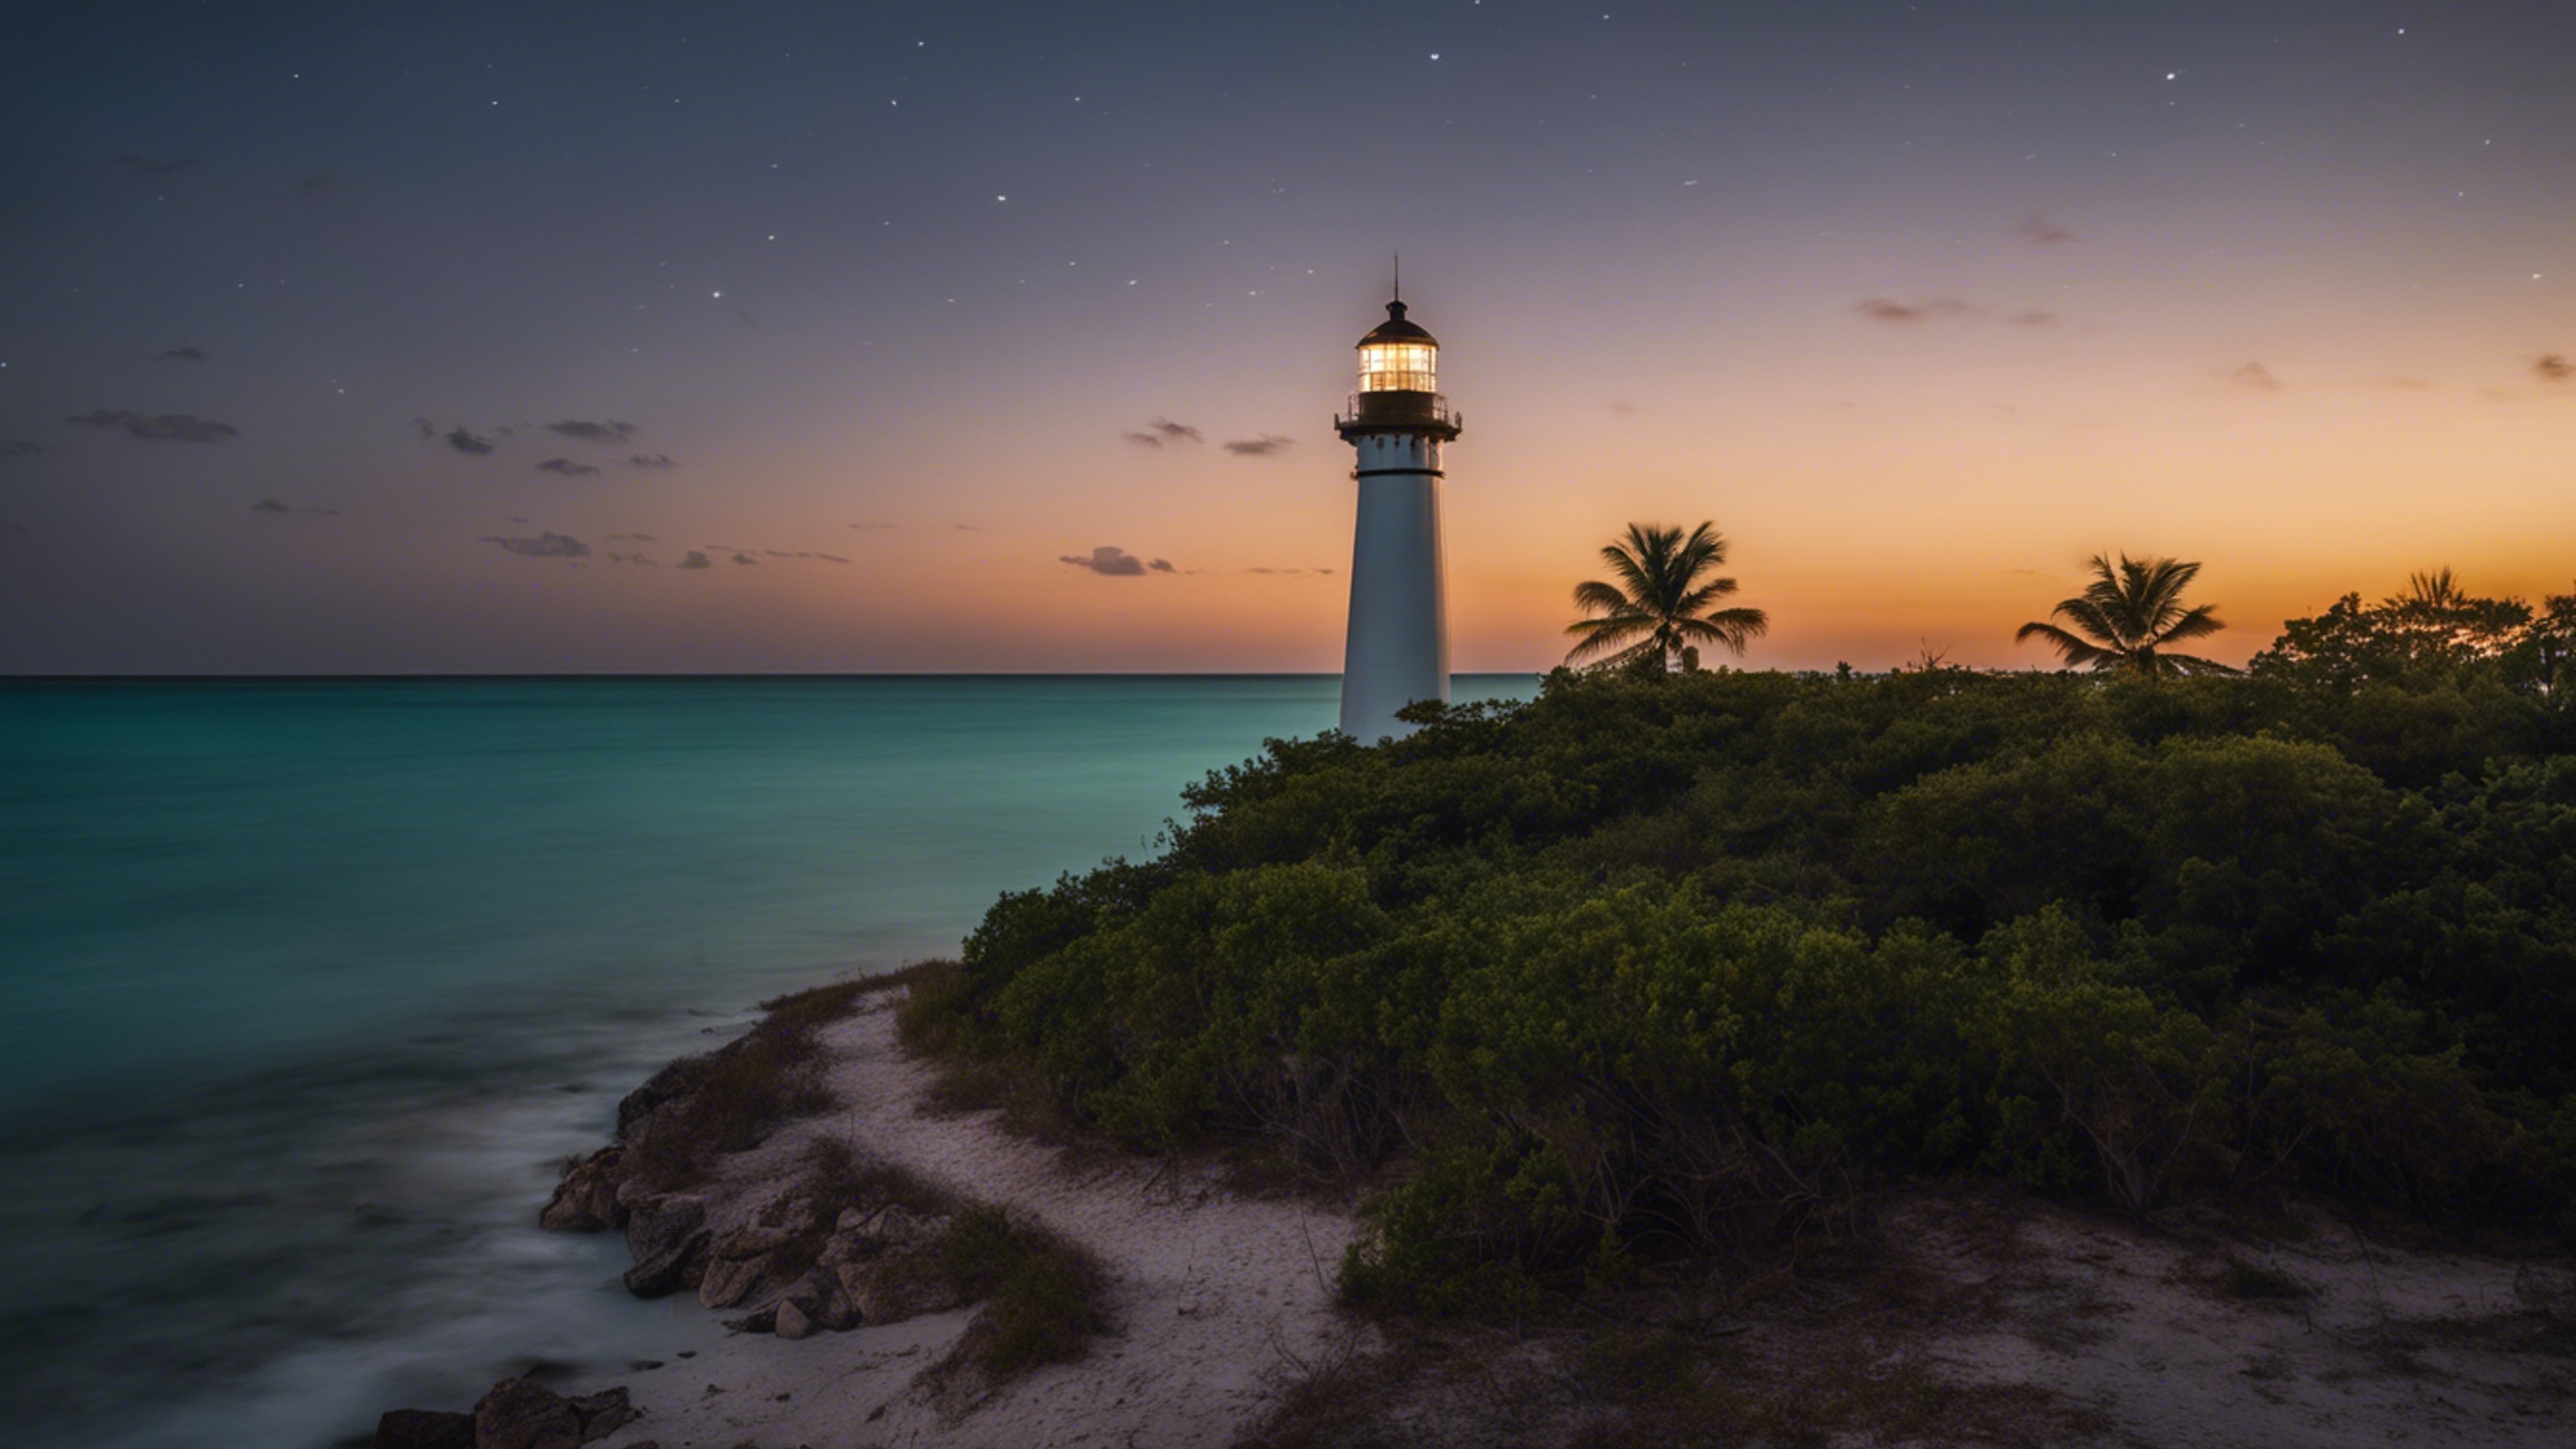 A night shot of an historic lighthouse in Key Biscayne, with the beam of light cutting through the darkness. duvar kağıdı[4d5993bb763c4a90b239]